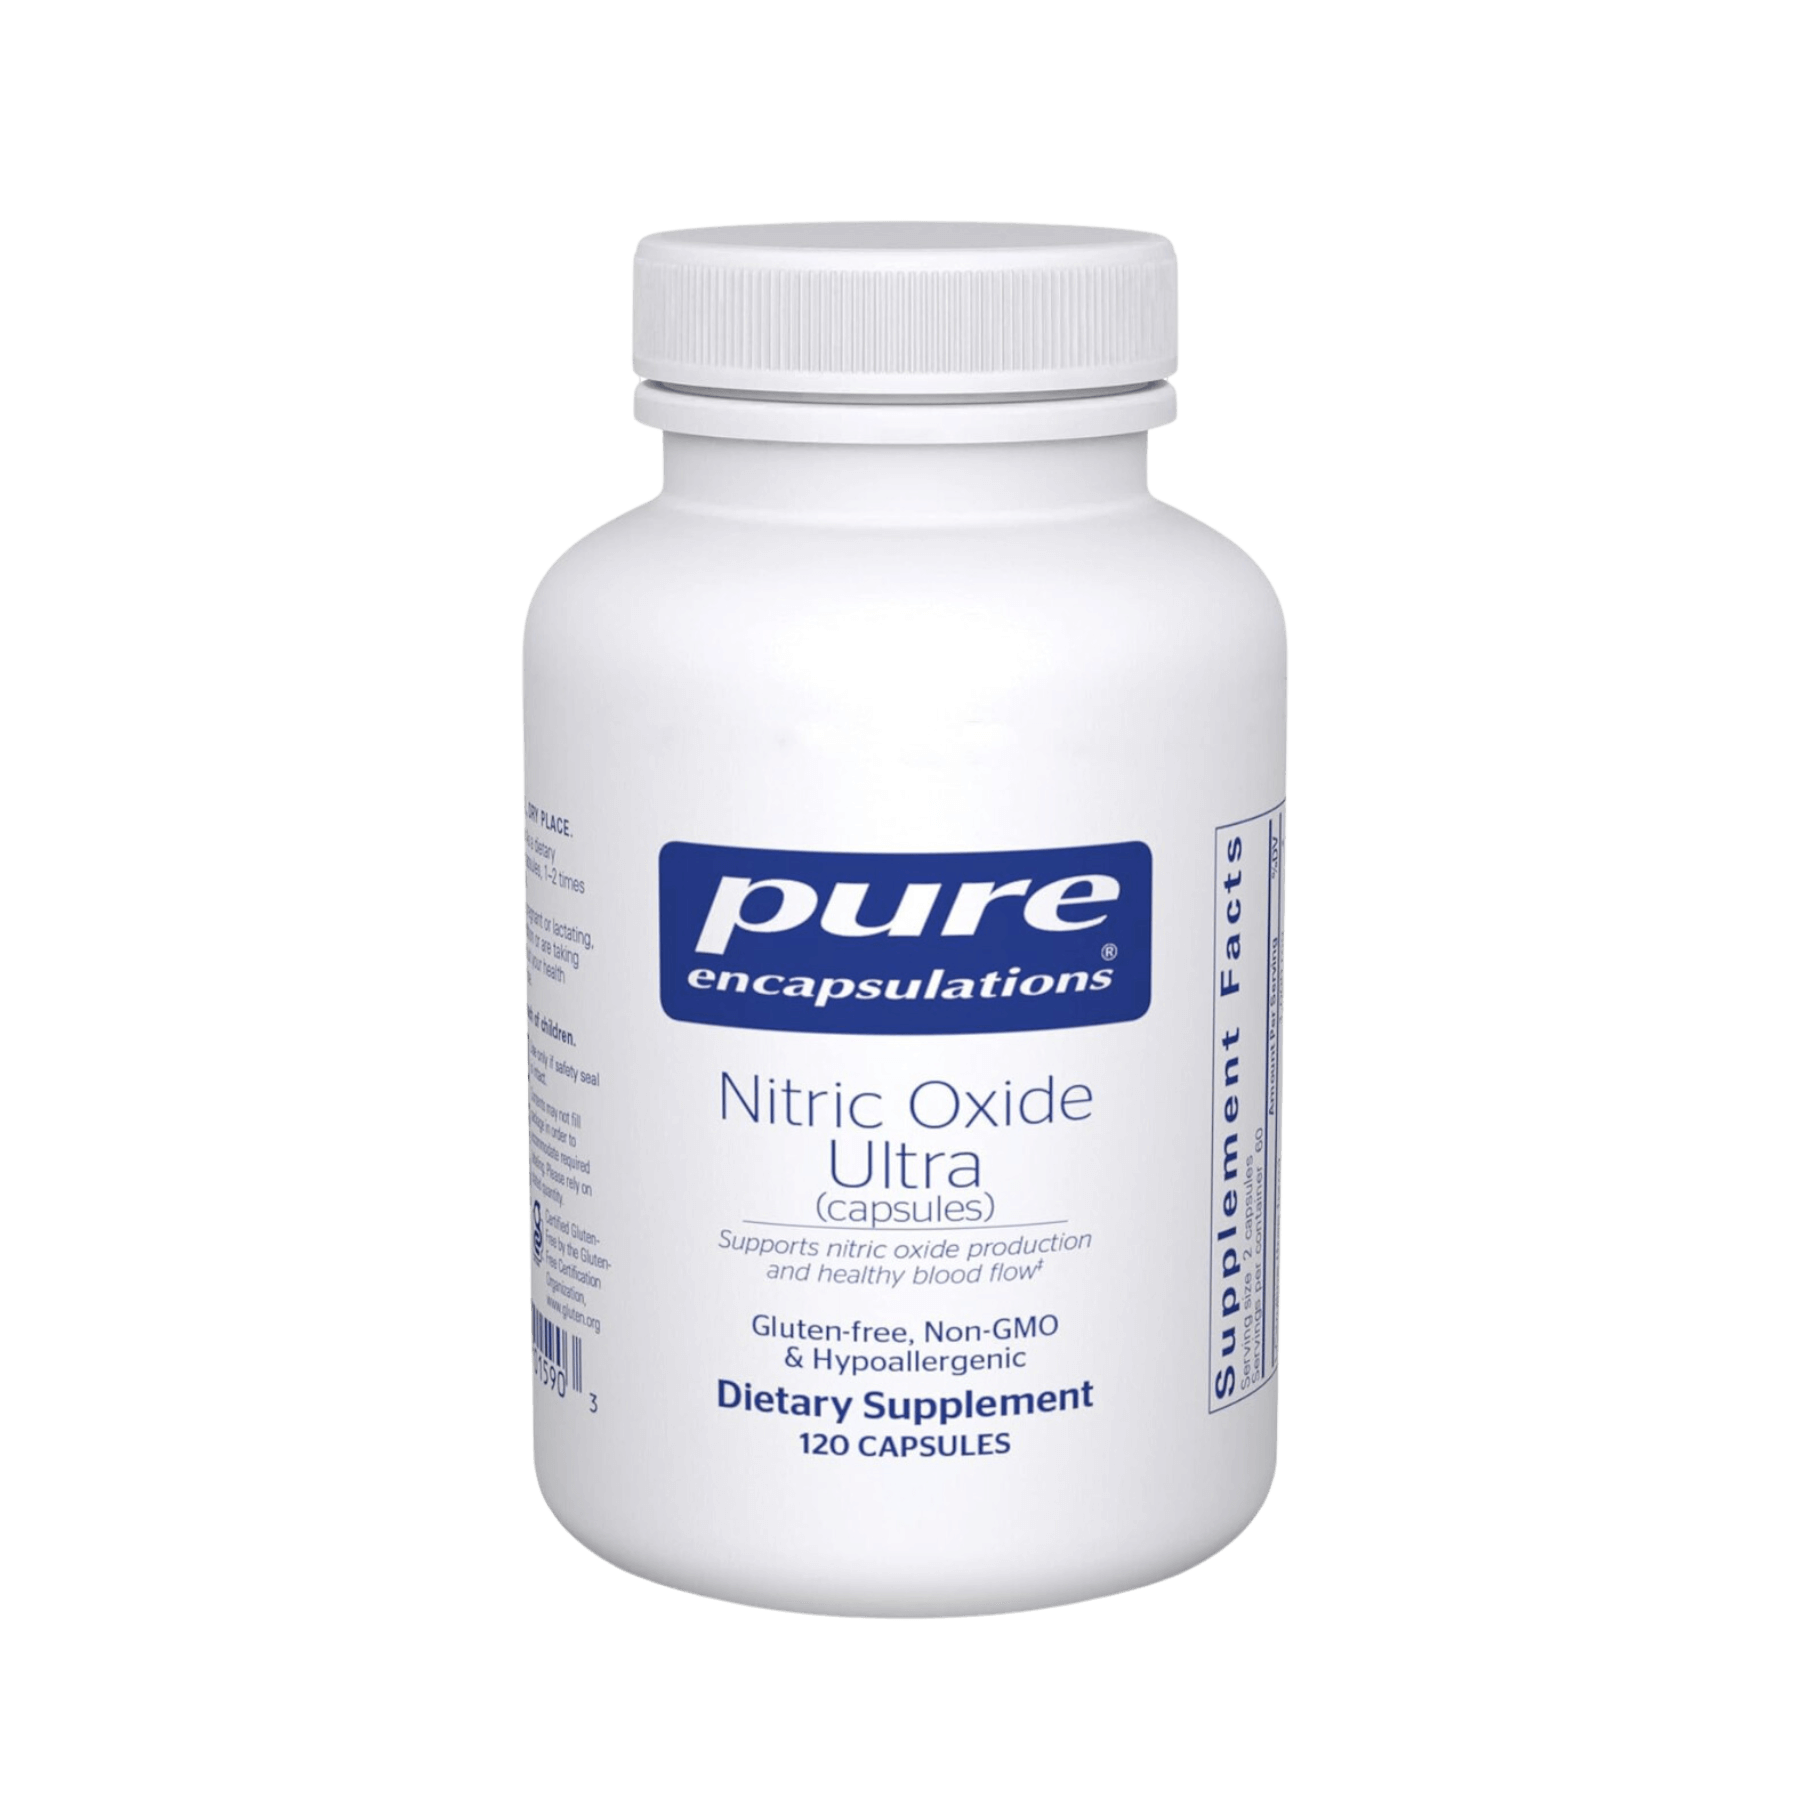 Pure Encapsulations Nitric Oxide Ultra Capsules